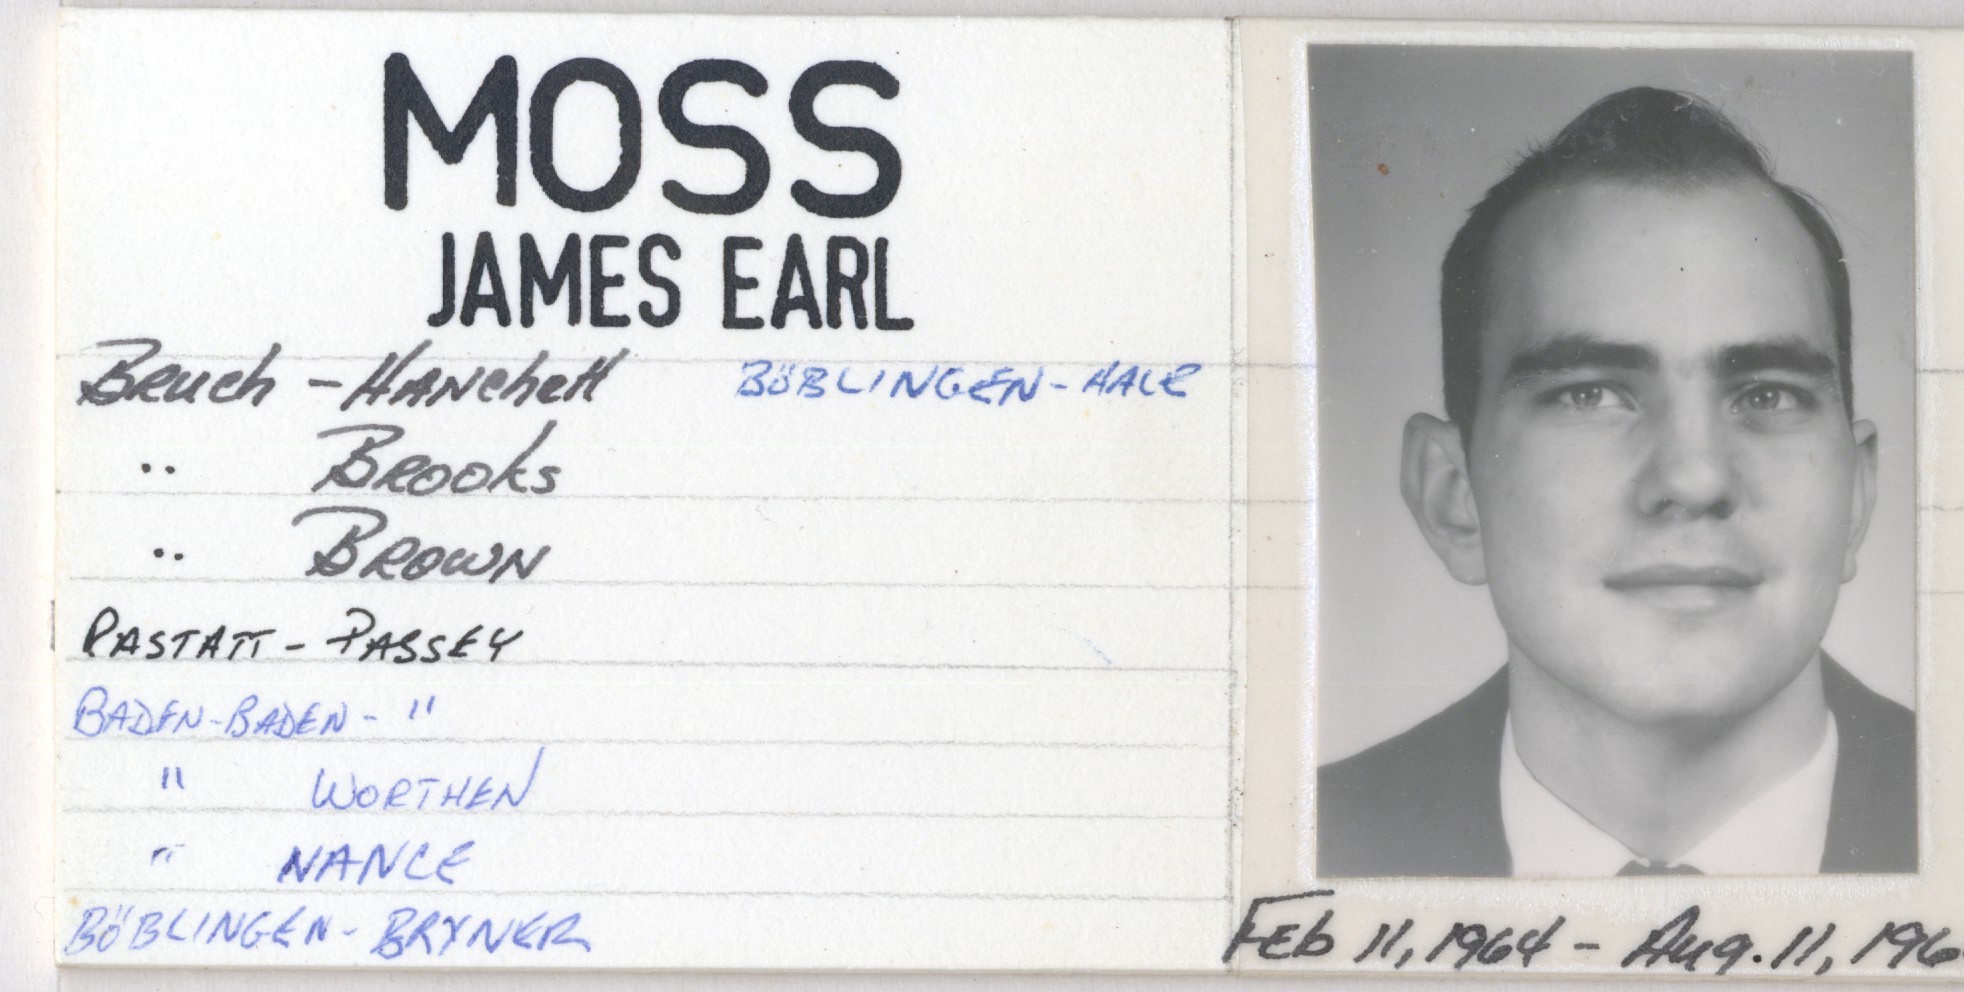 Moss, James Earl